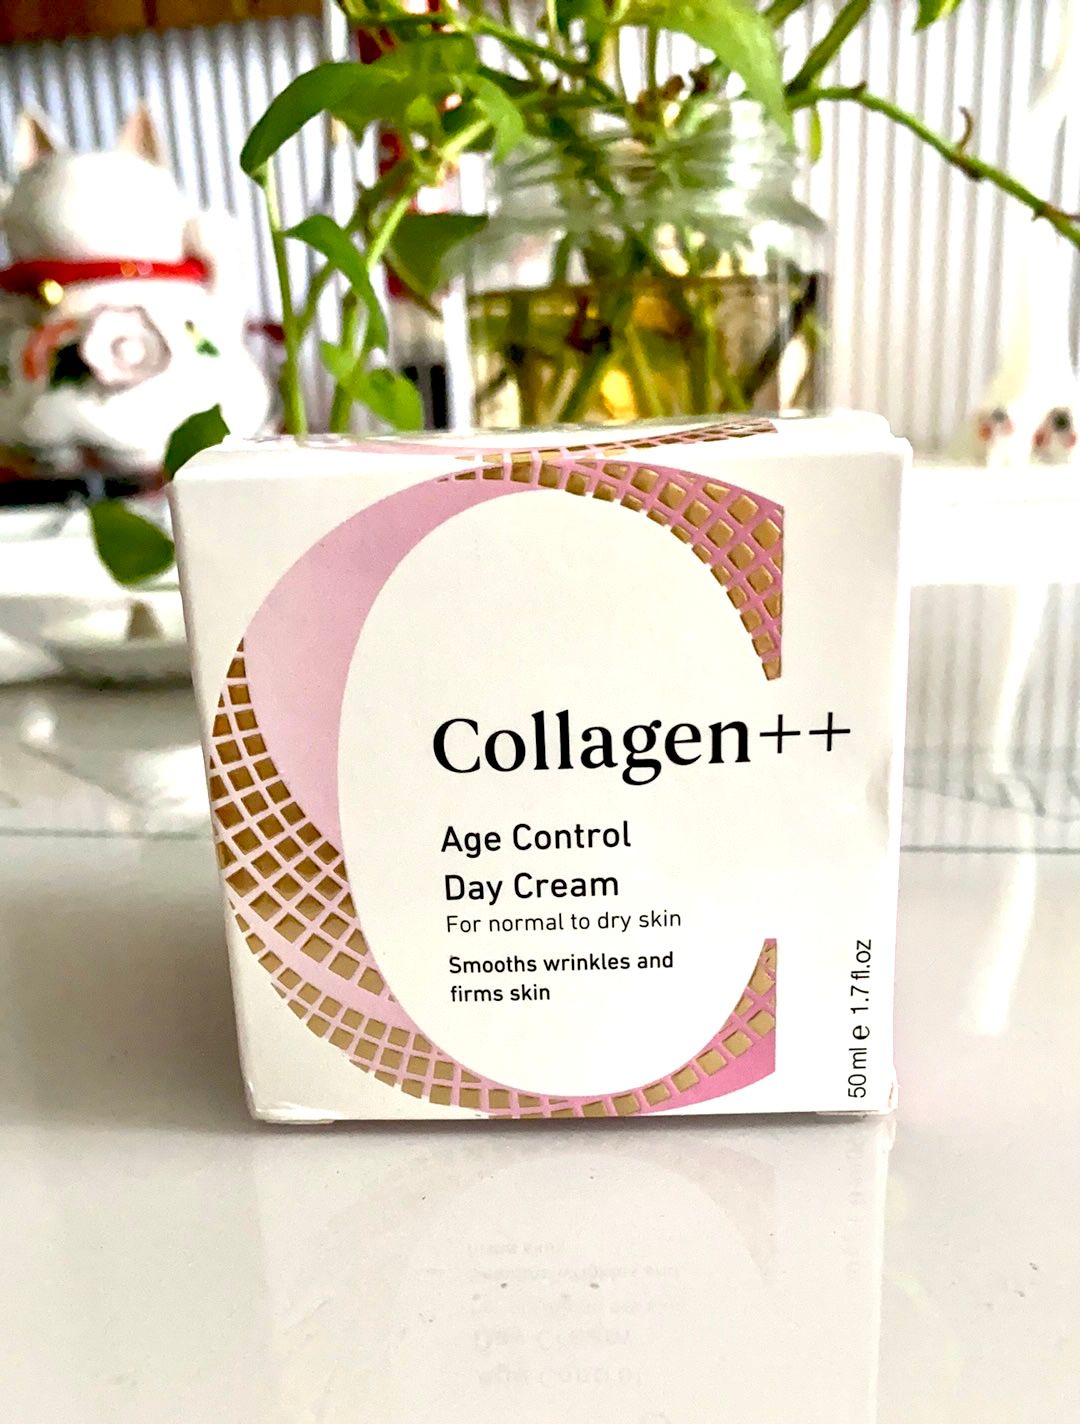  Kem dưỡng da ban ngày Collagen ++ Age Control 